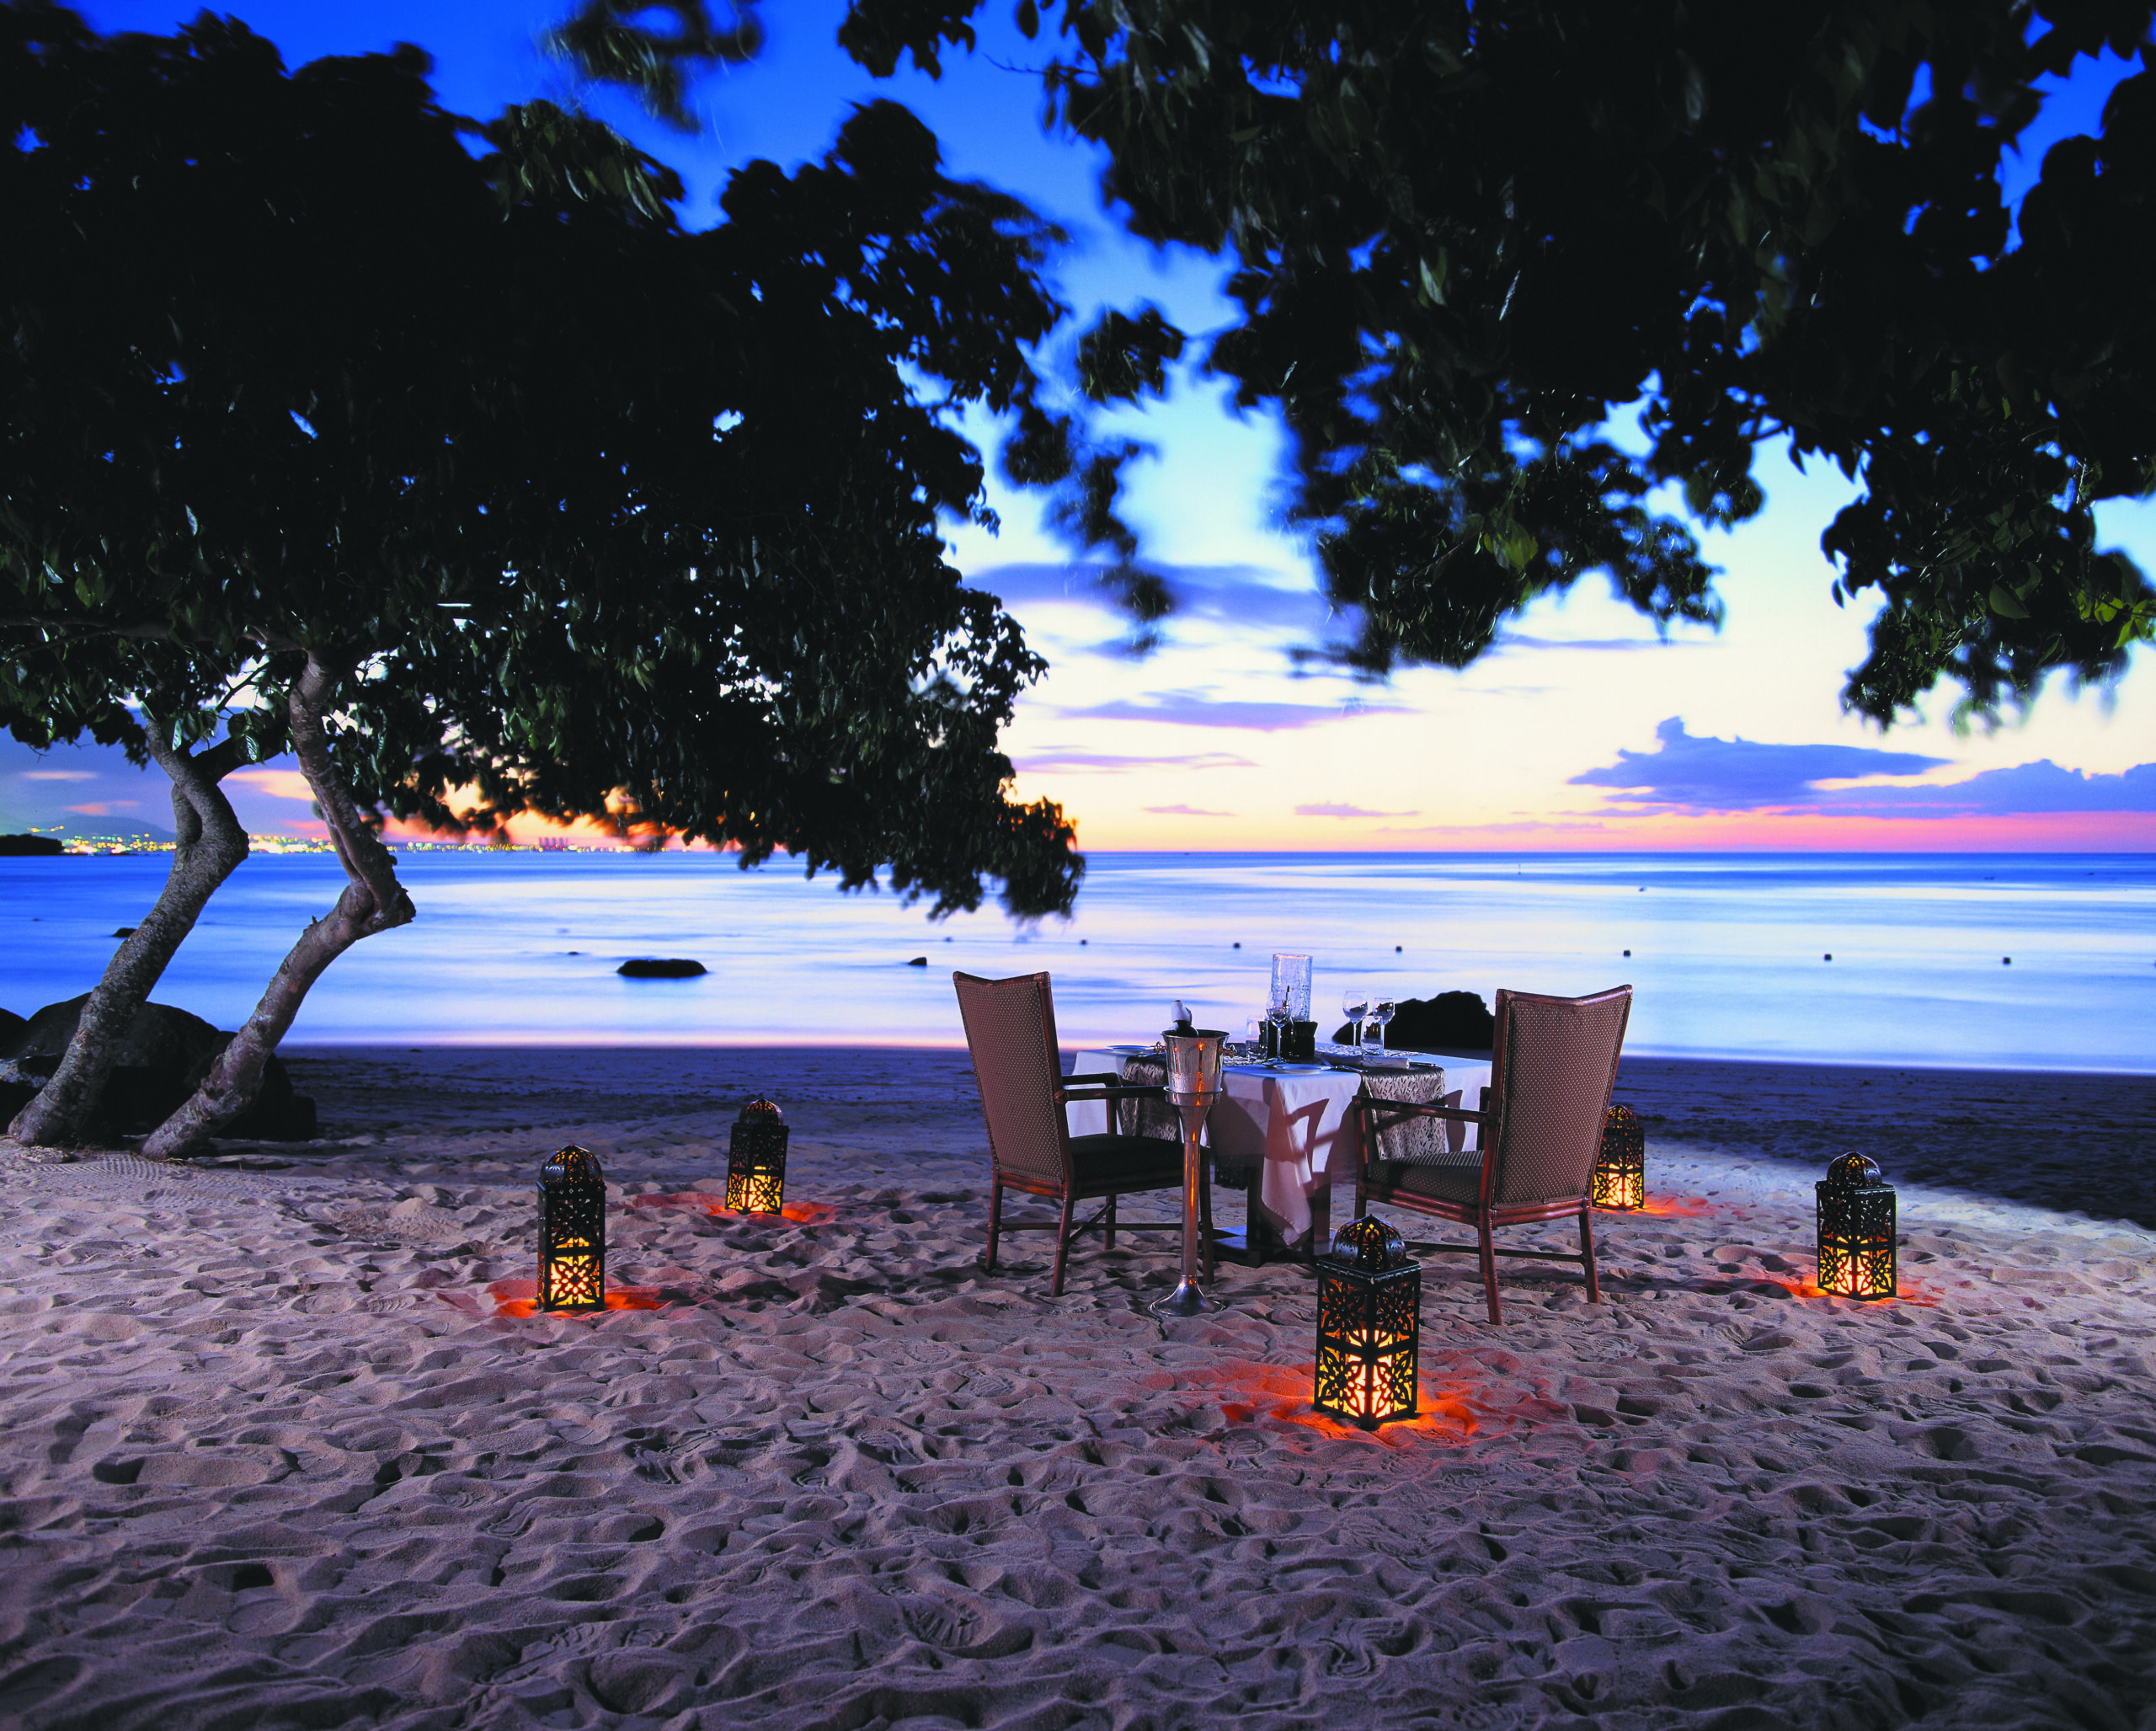 Romantisches Setting am Strand - so geht Heiraten auf Mauritius im Oberoi